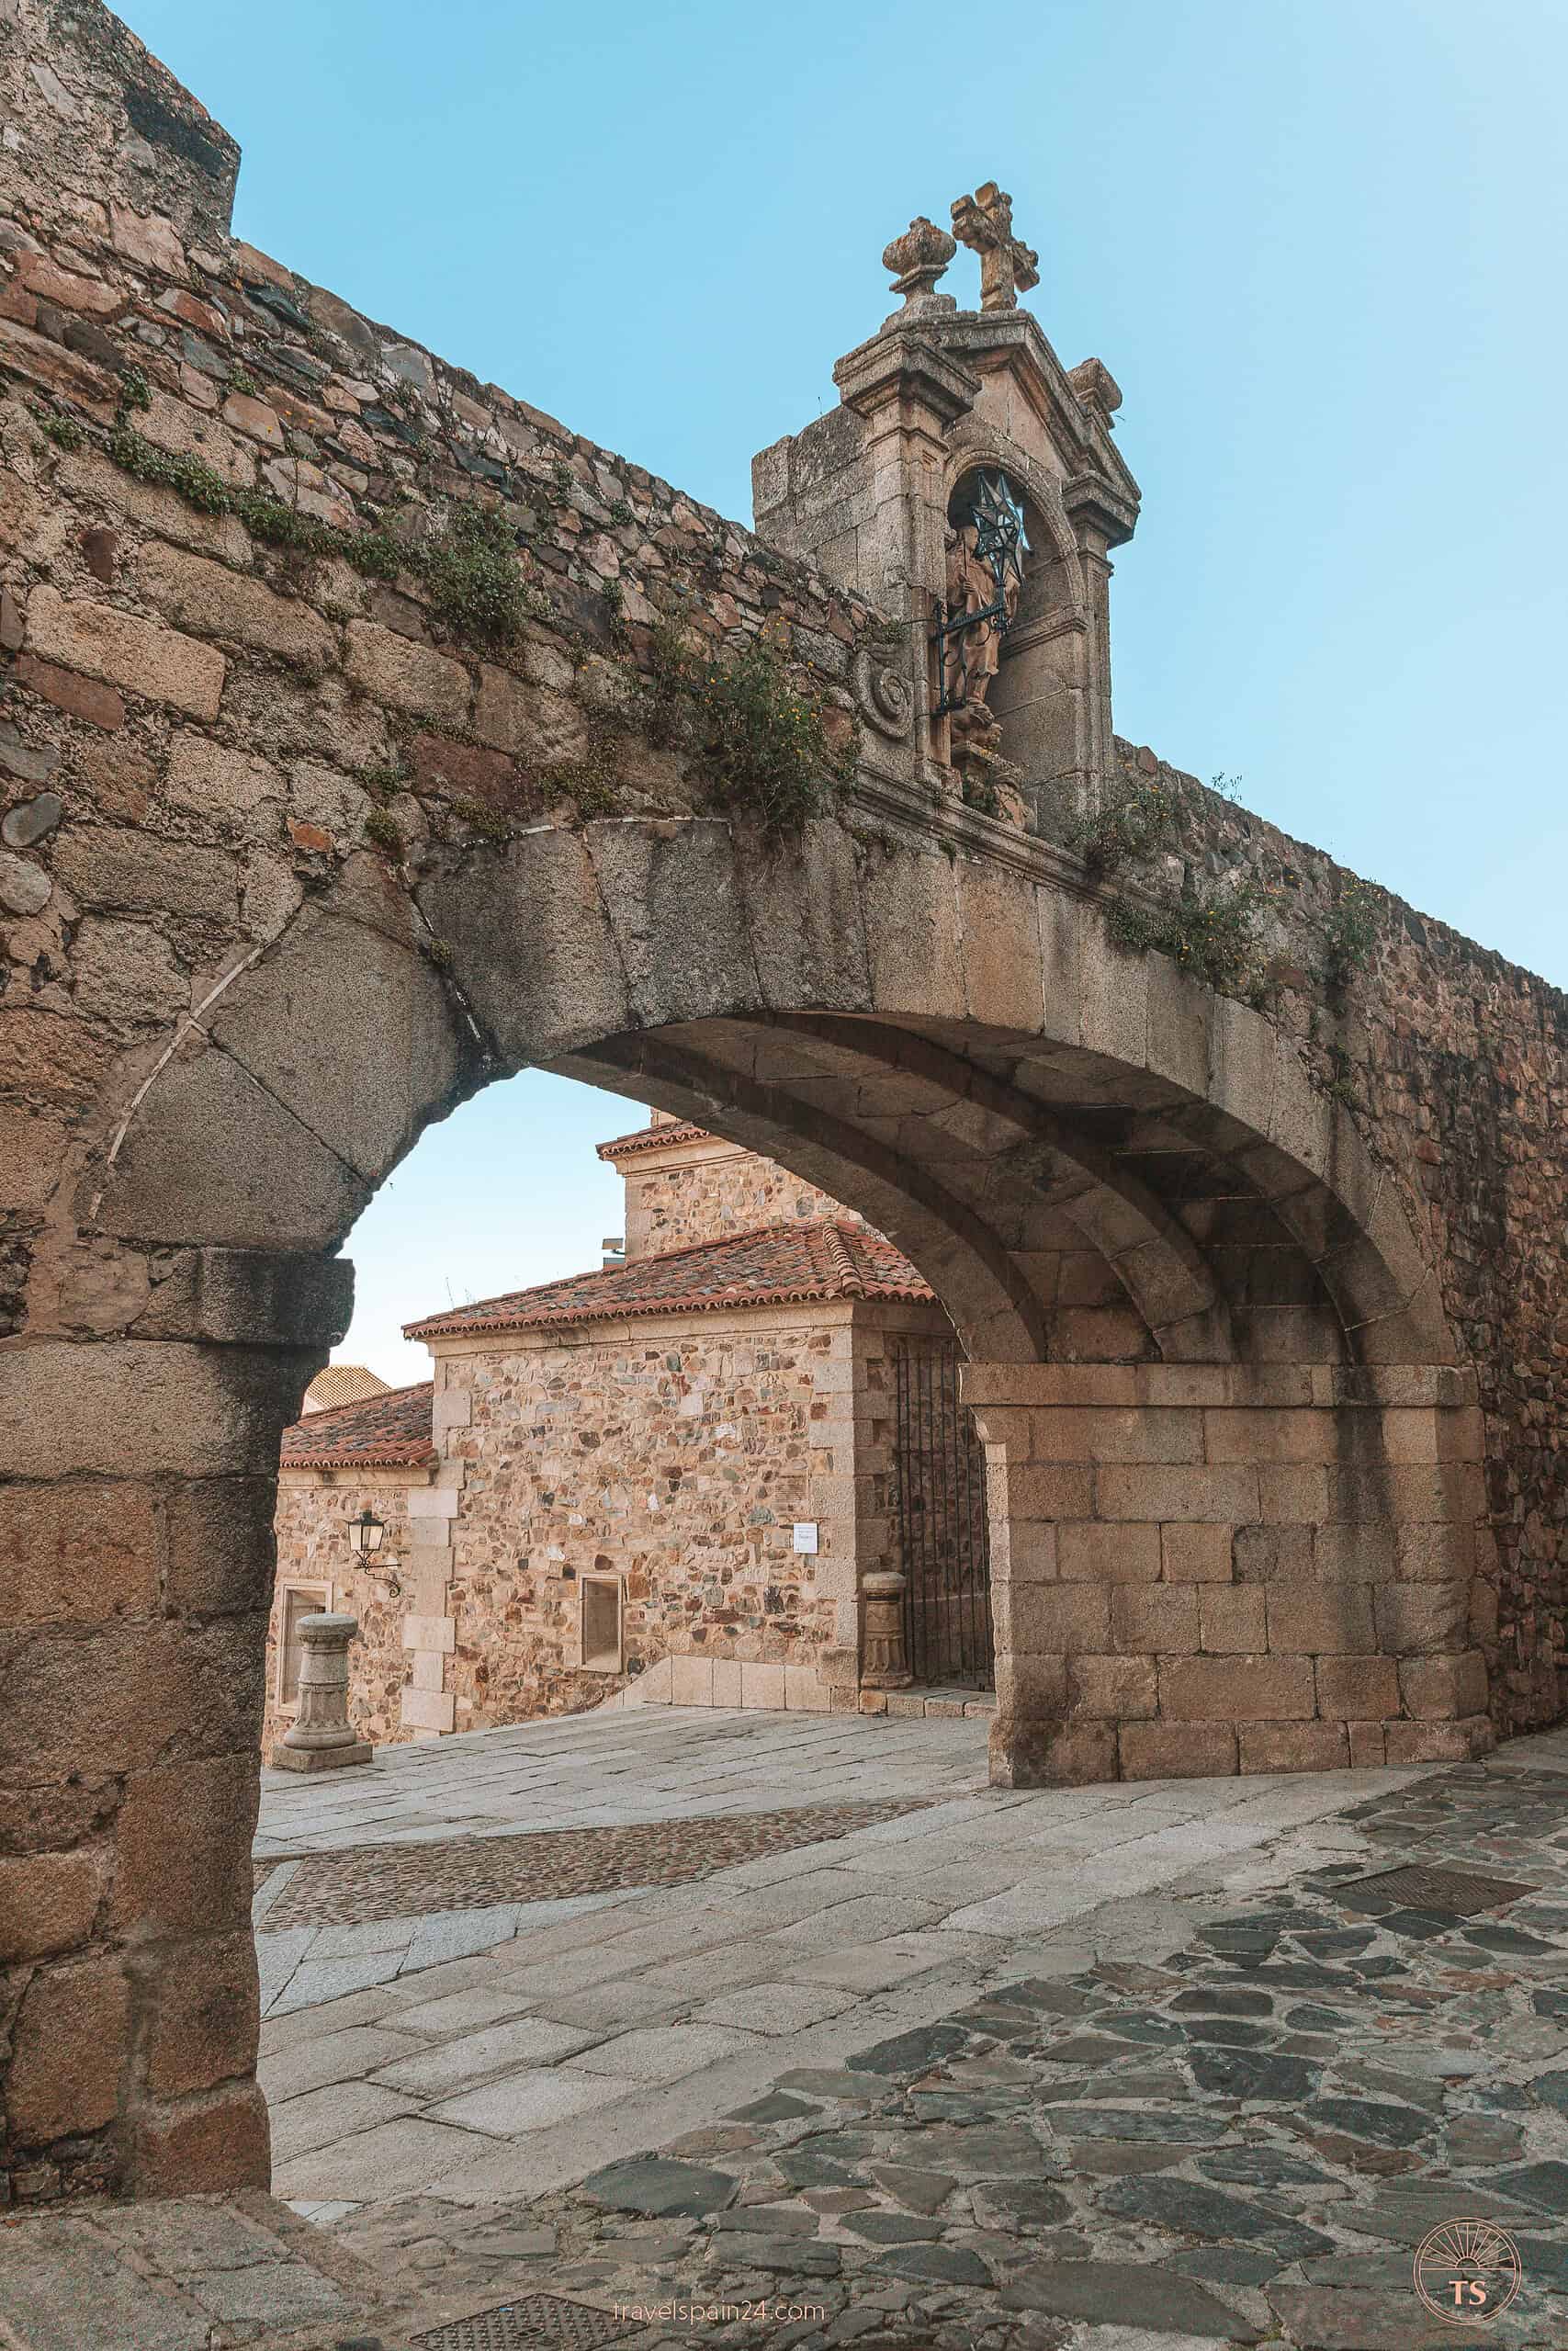 The majestic Arco de la Estrella framing our path as we enter the main square of Cáceres, a gateway to more discoveries.